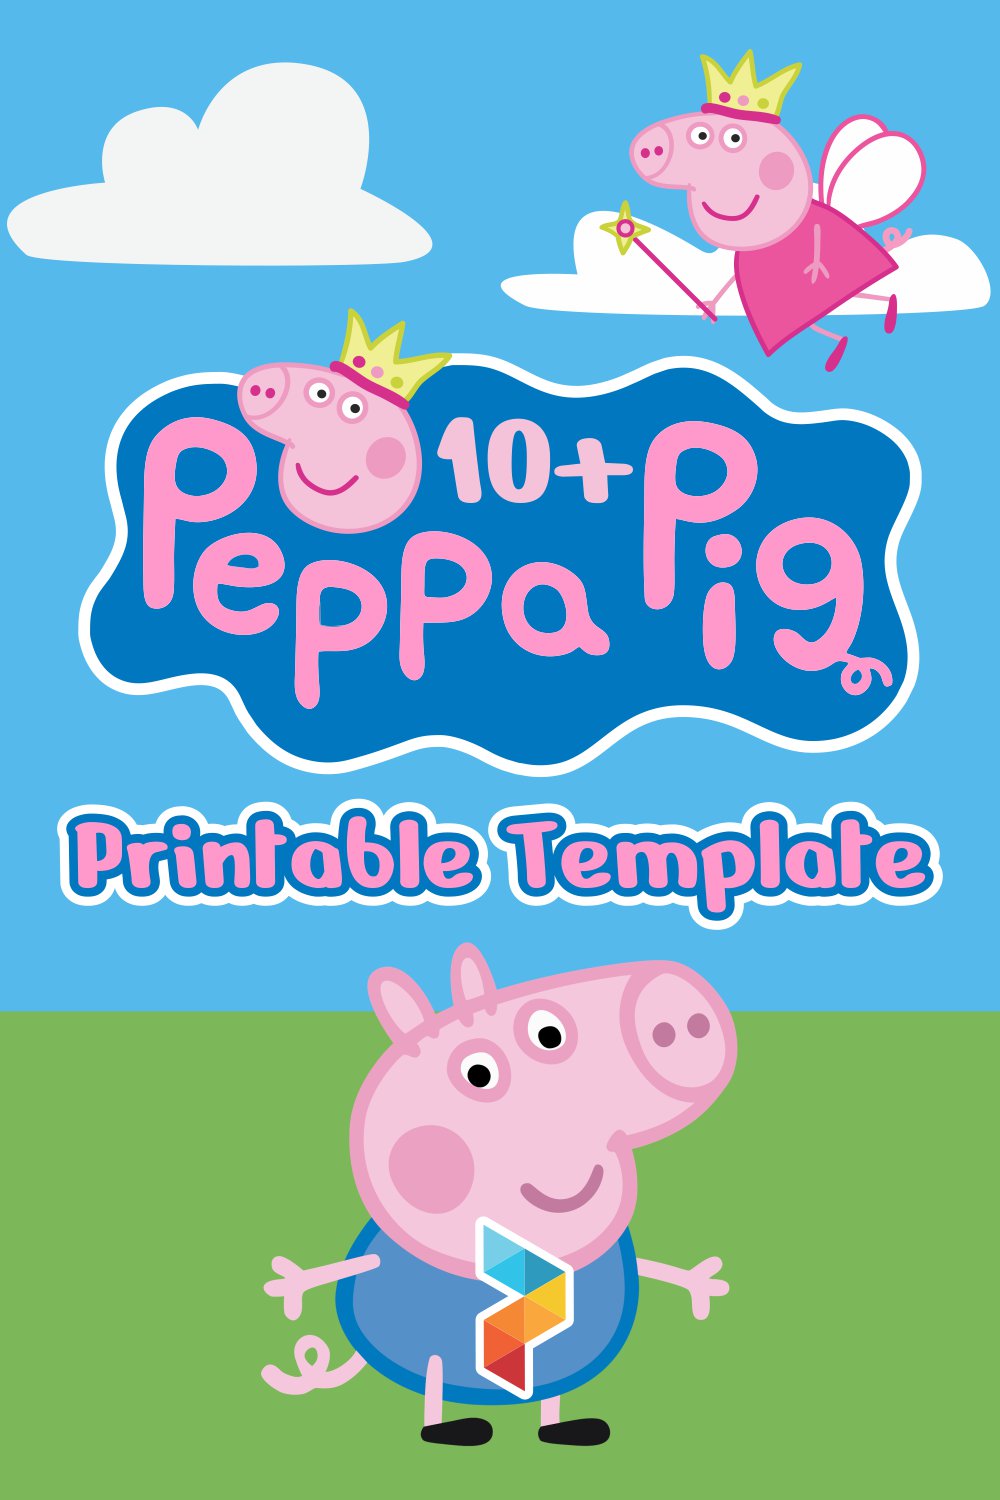 Peppa Pig Template